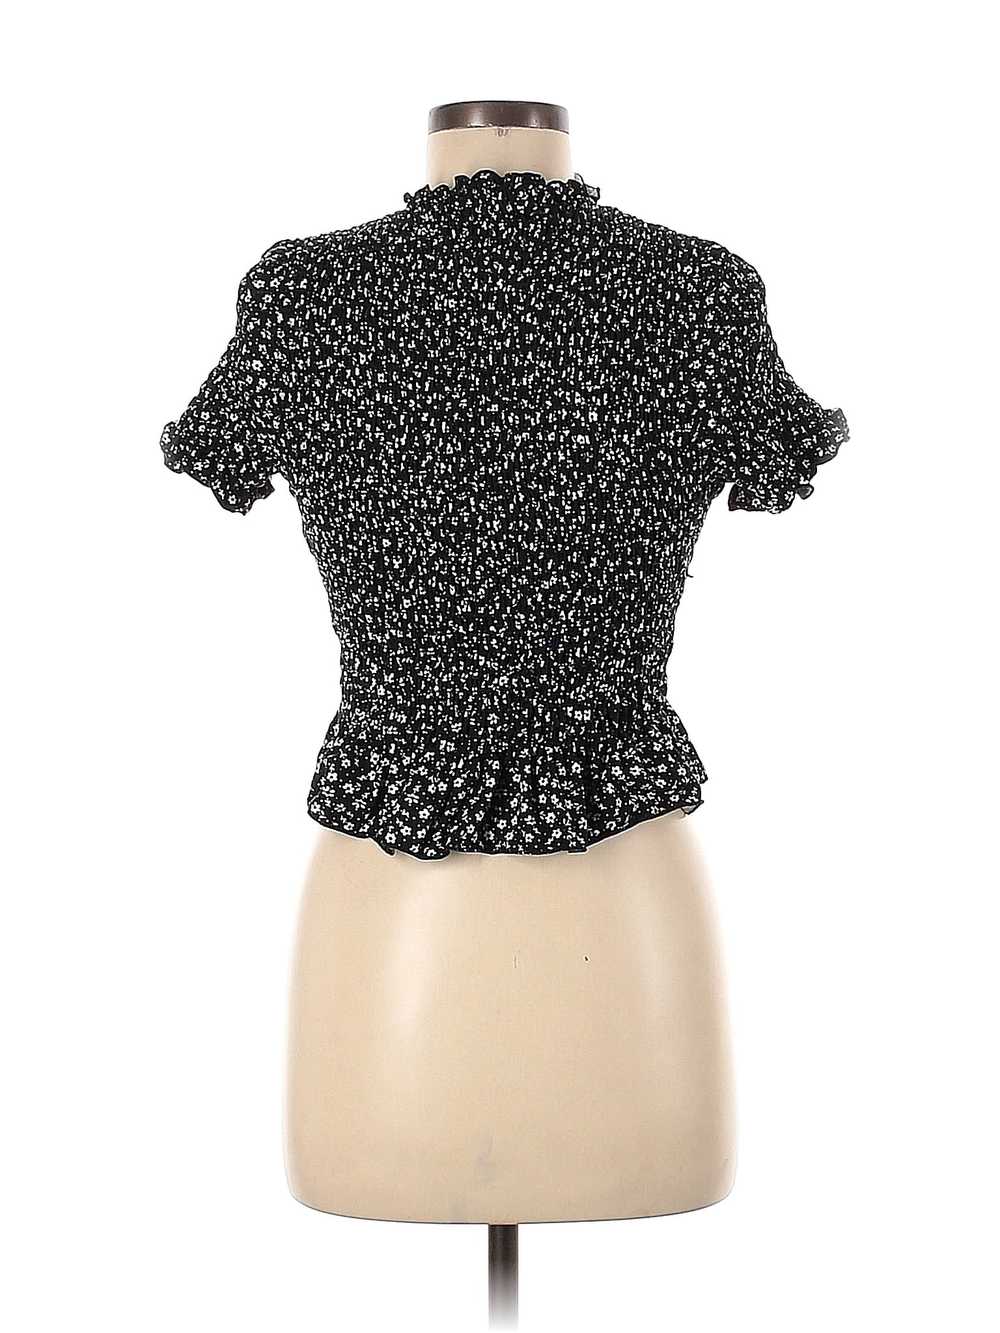 Aqua Women Black Short Sleeve Top M - image 2